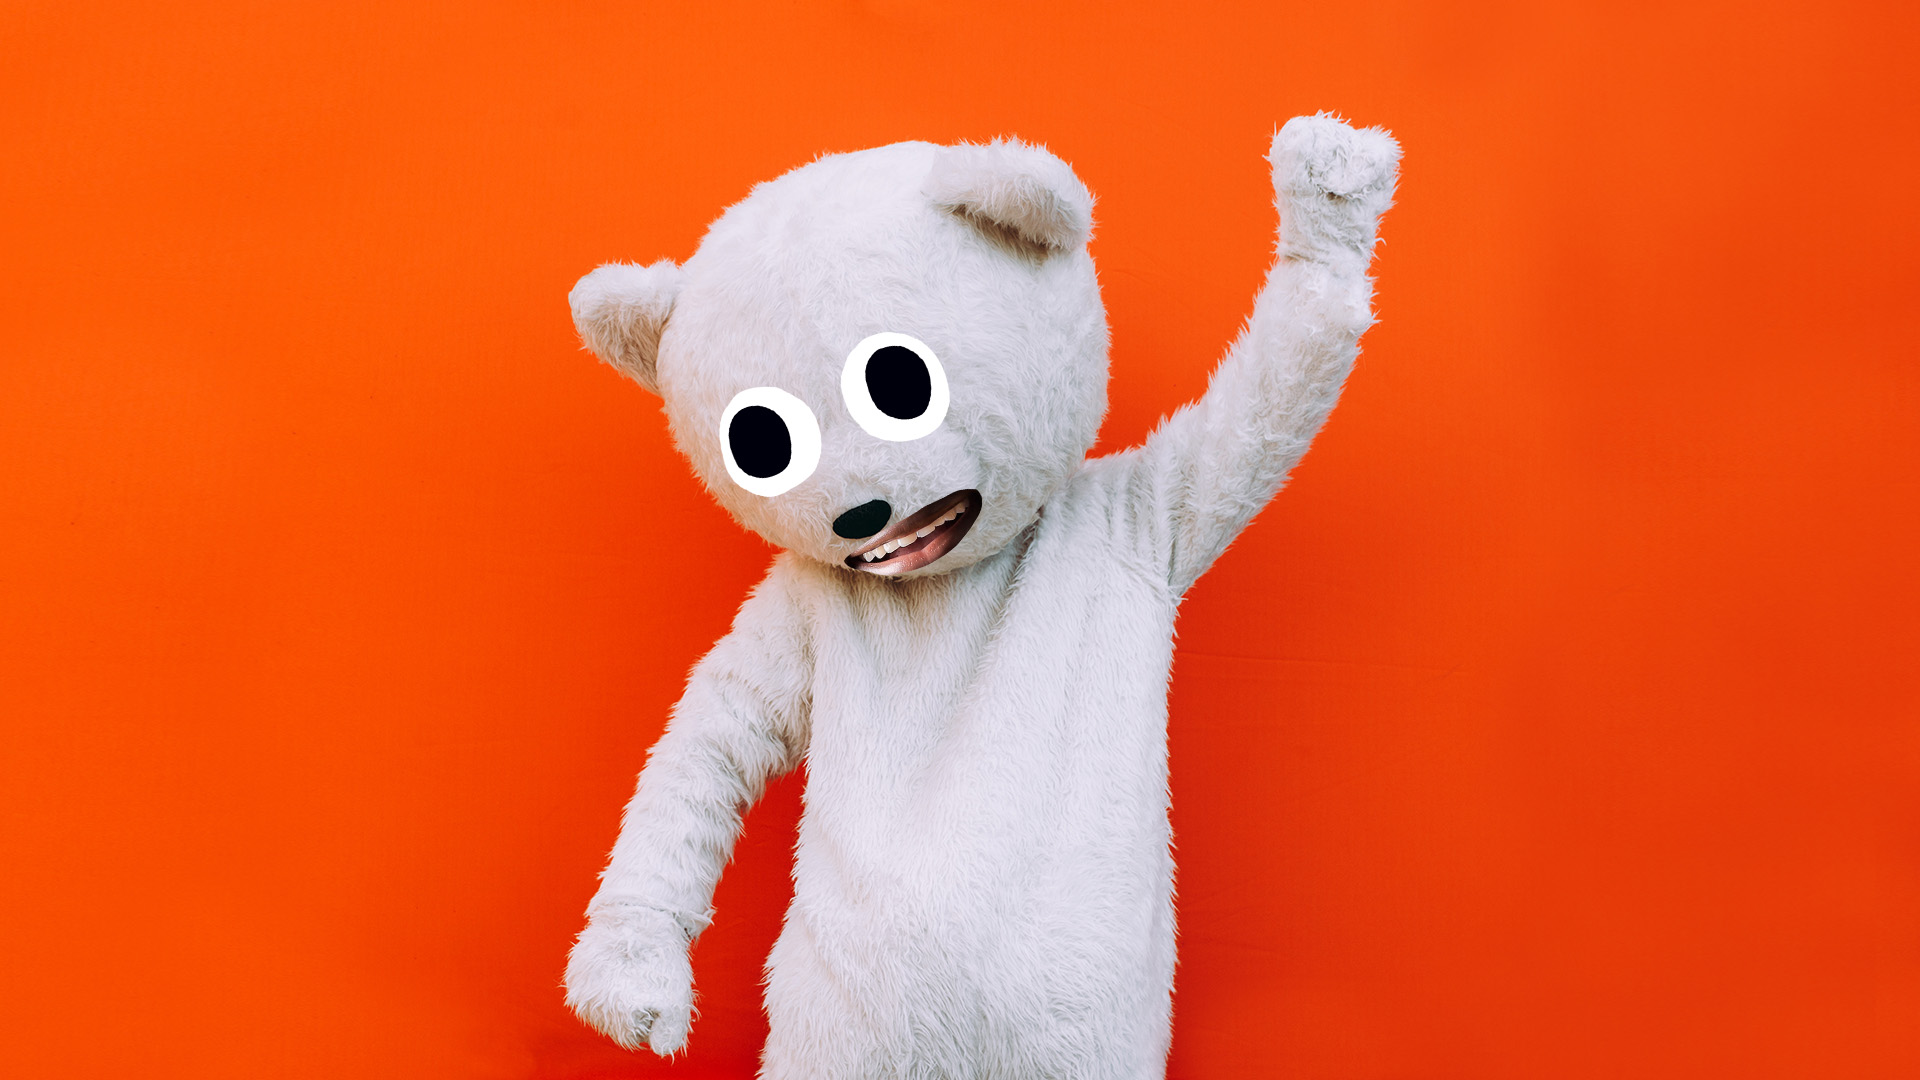 A bear costume used as a mascot